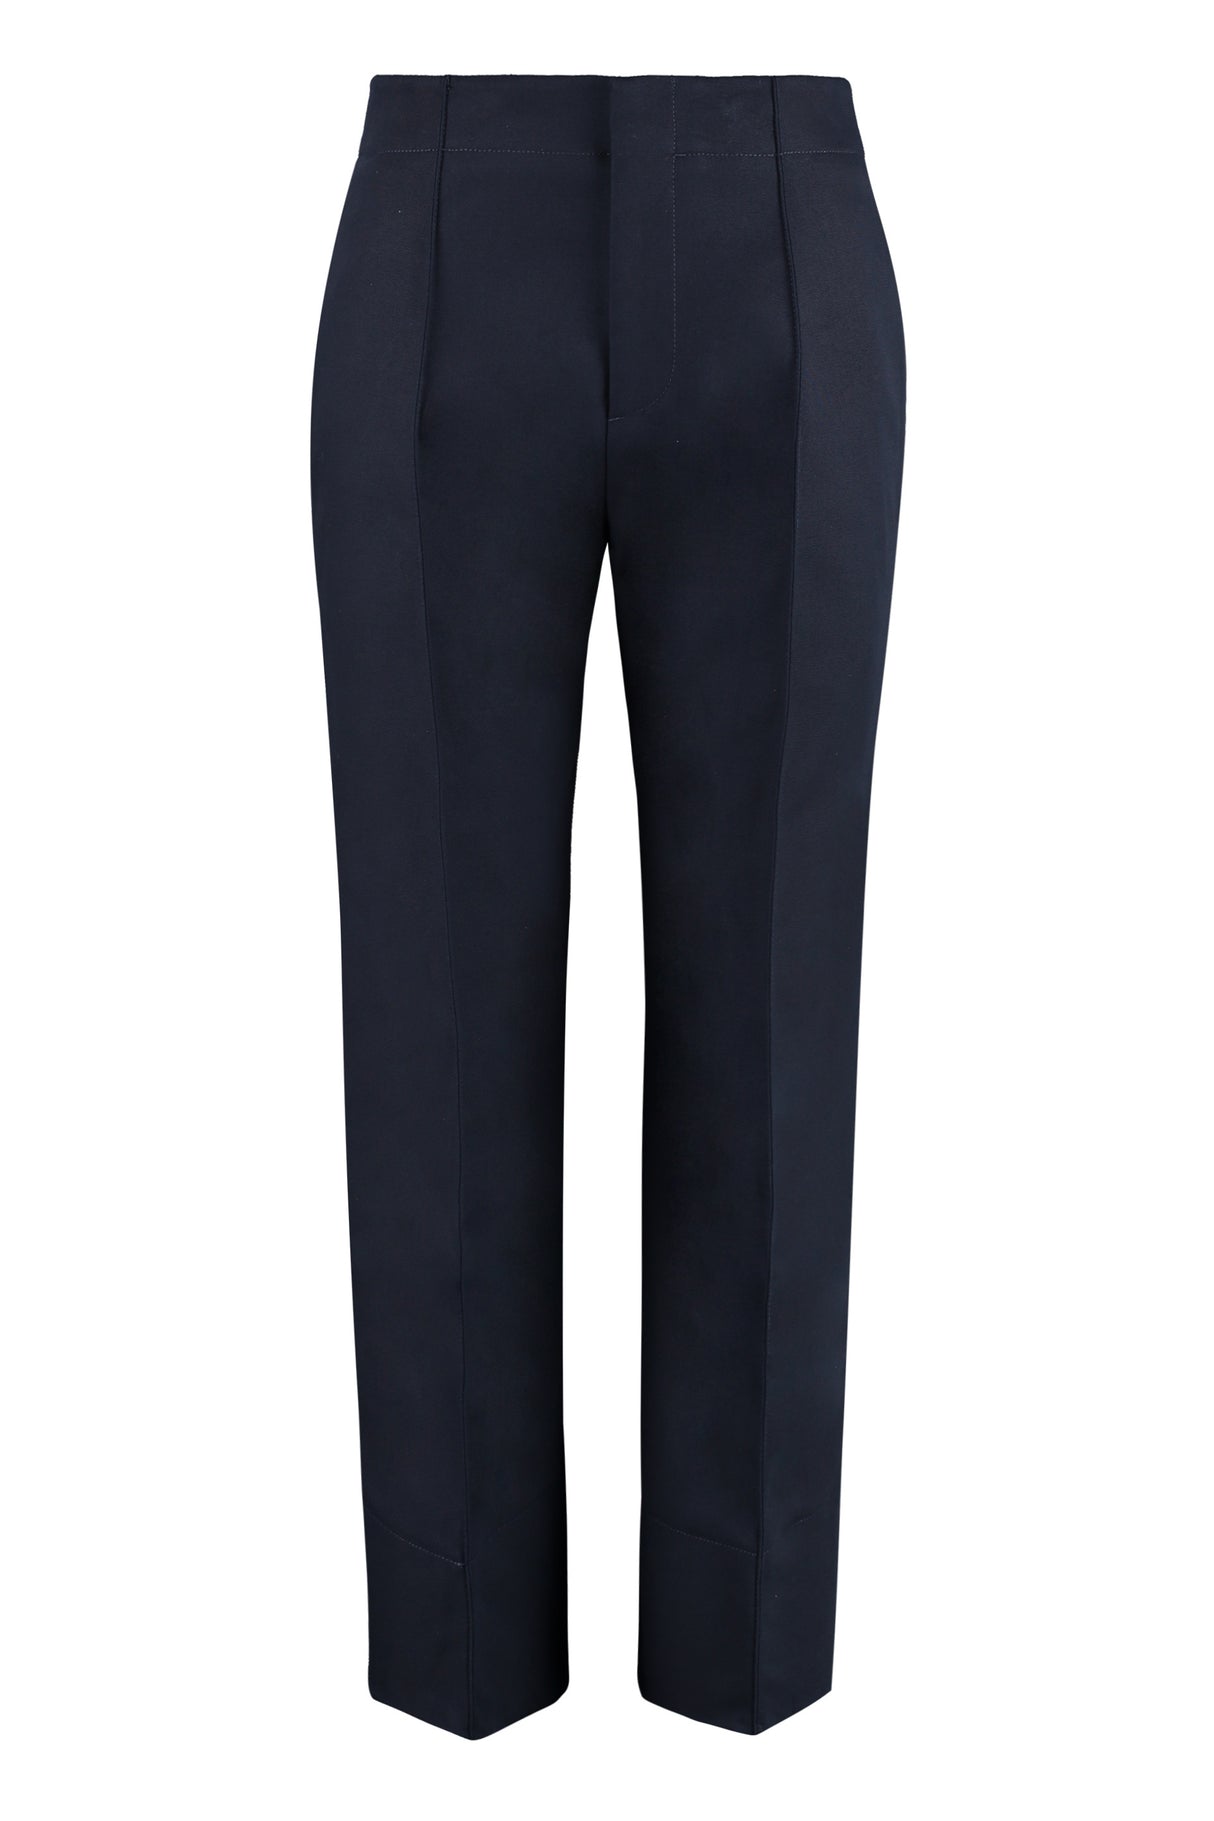 BOTTEGA VENETA High-Rise Cotton Trousers for Women in Blue - FW22